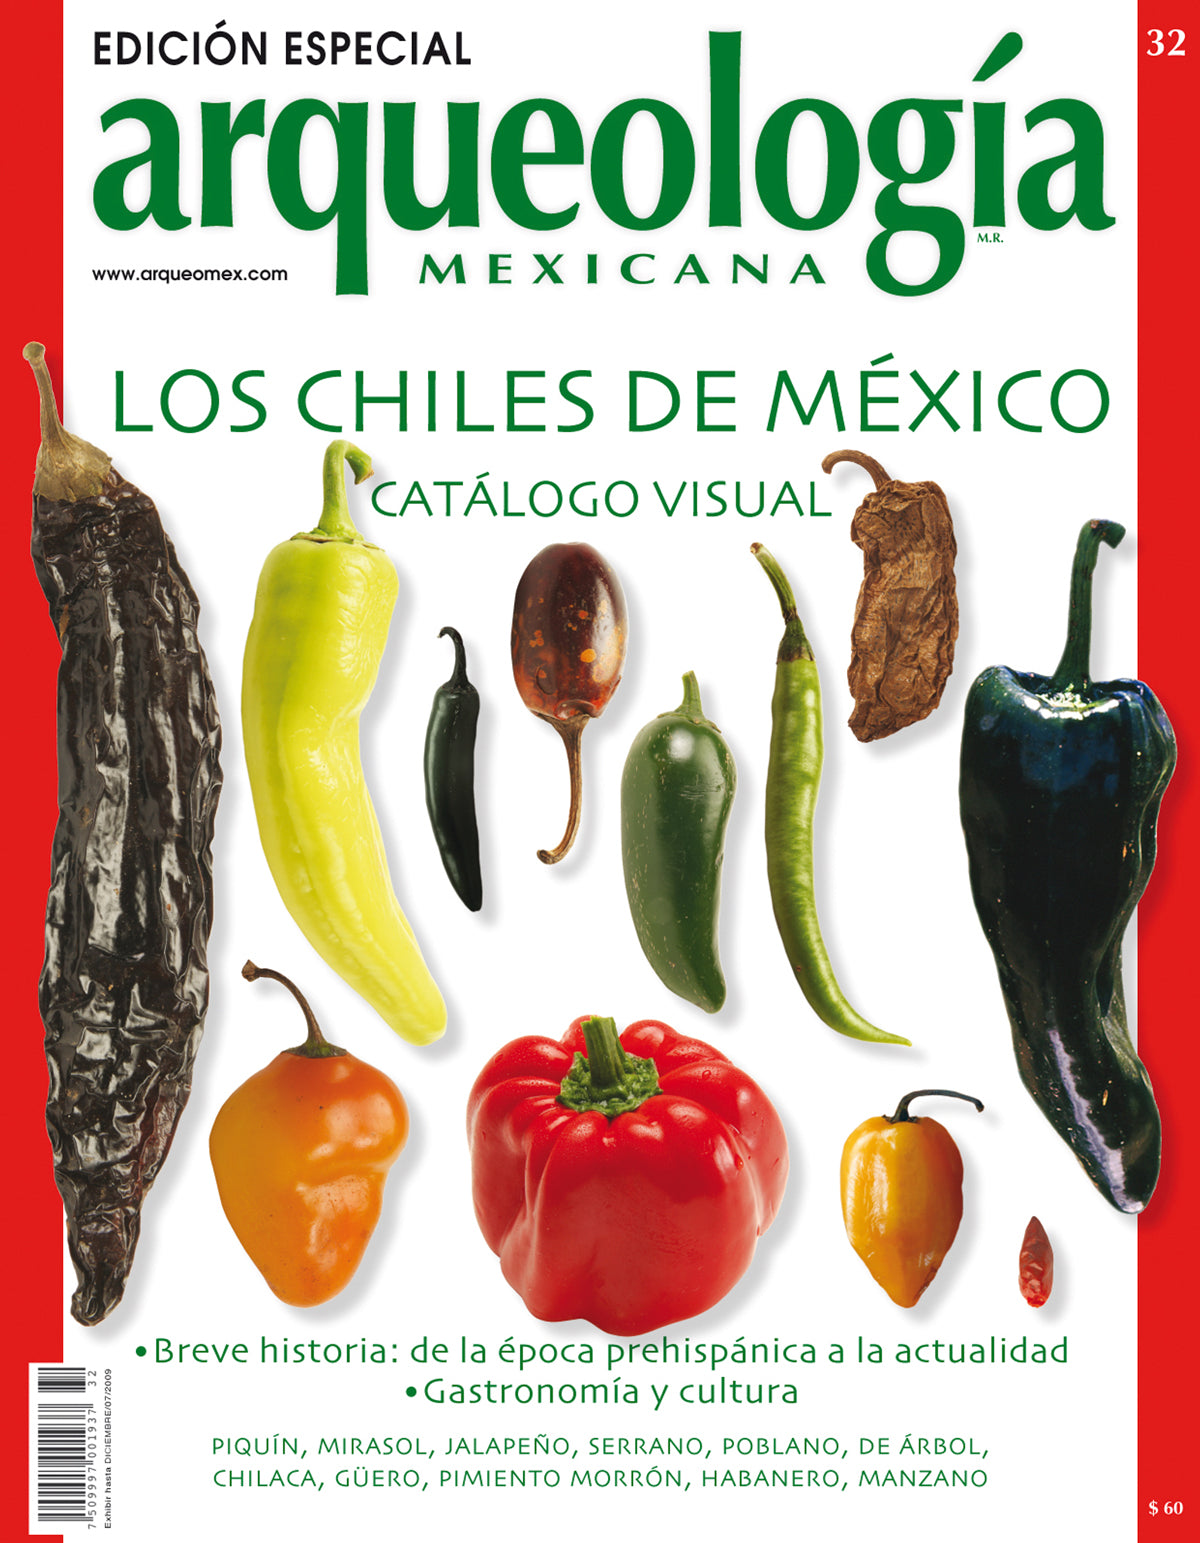 Los chiles de México. Catálogo visual